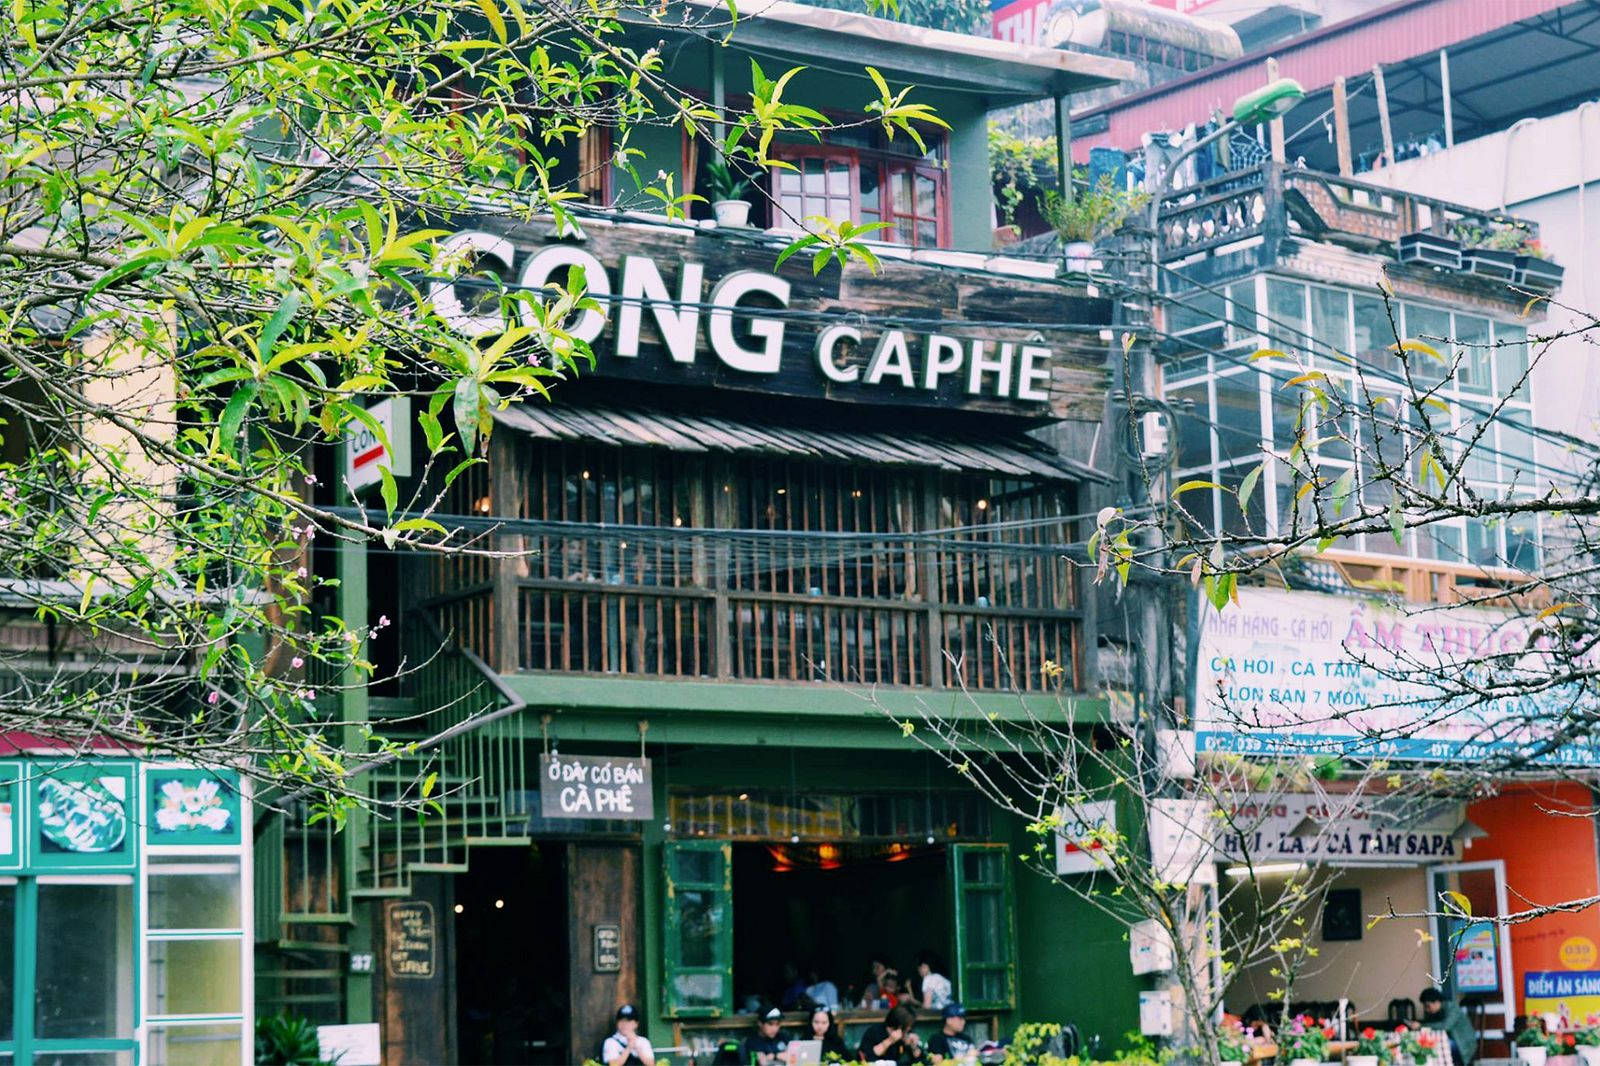 Cong Caphe In Hanoi City Background